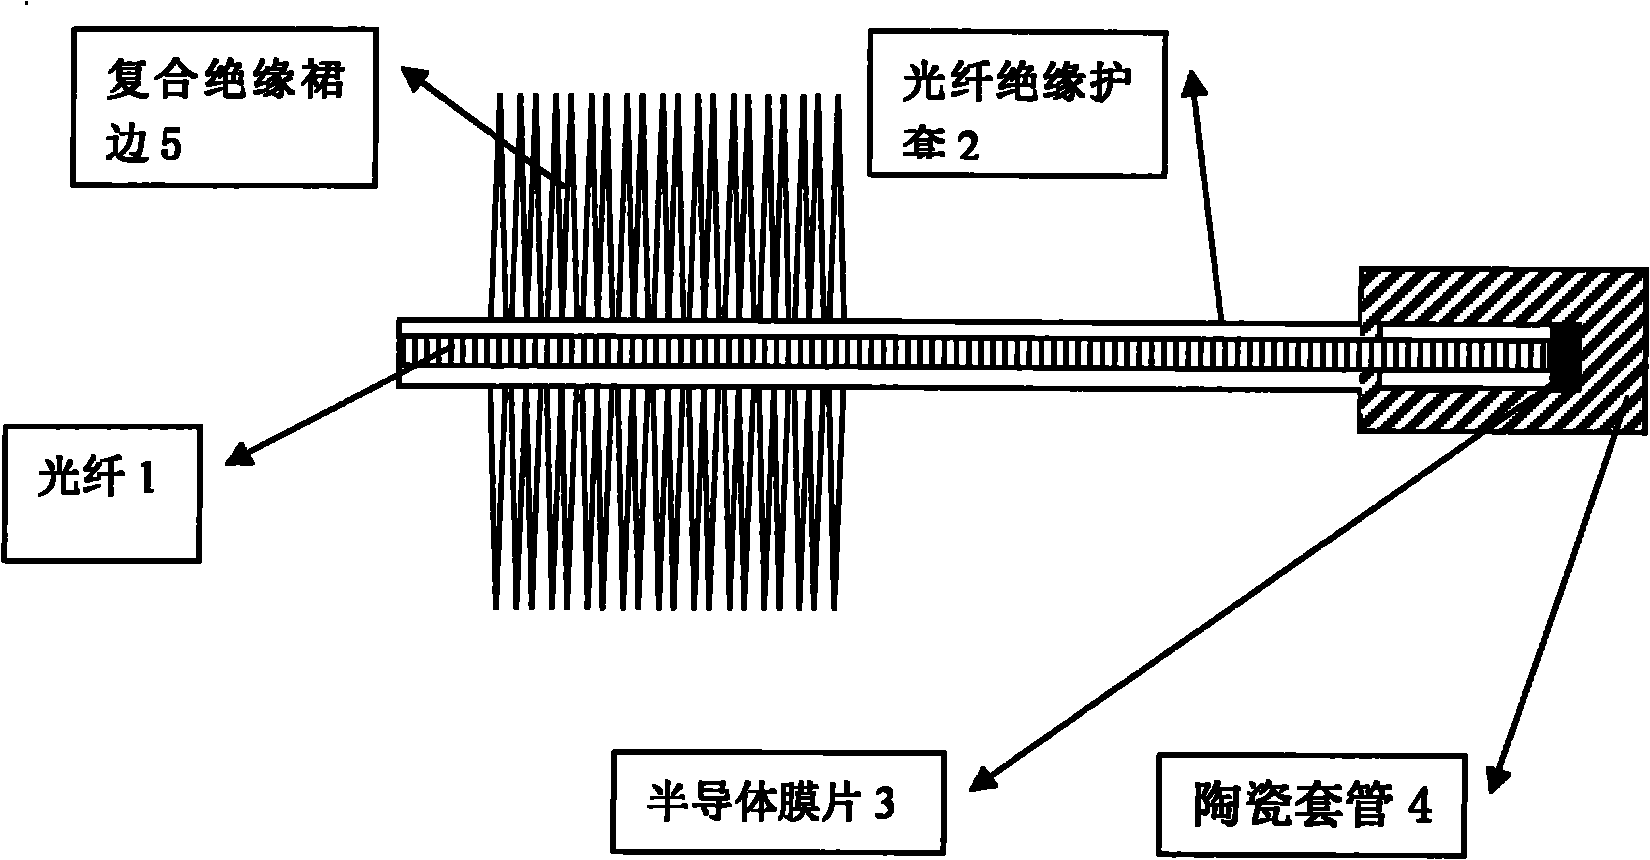 Passive optical fiber temperature semiconductor sensor